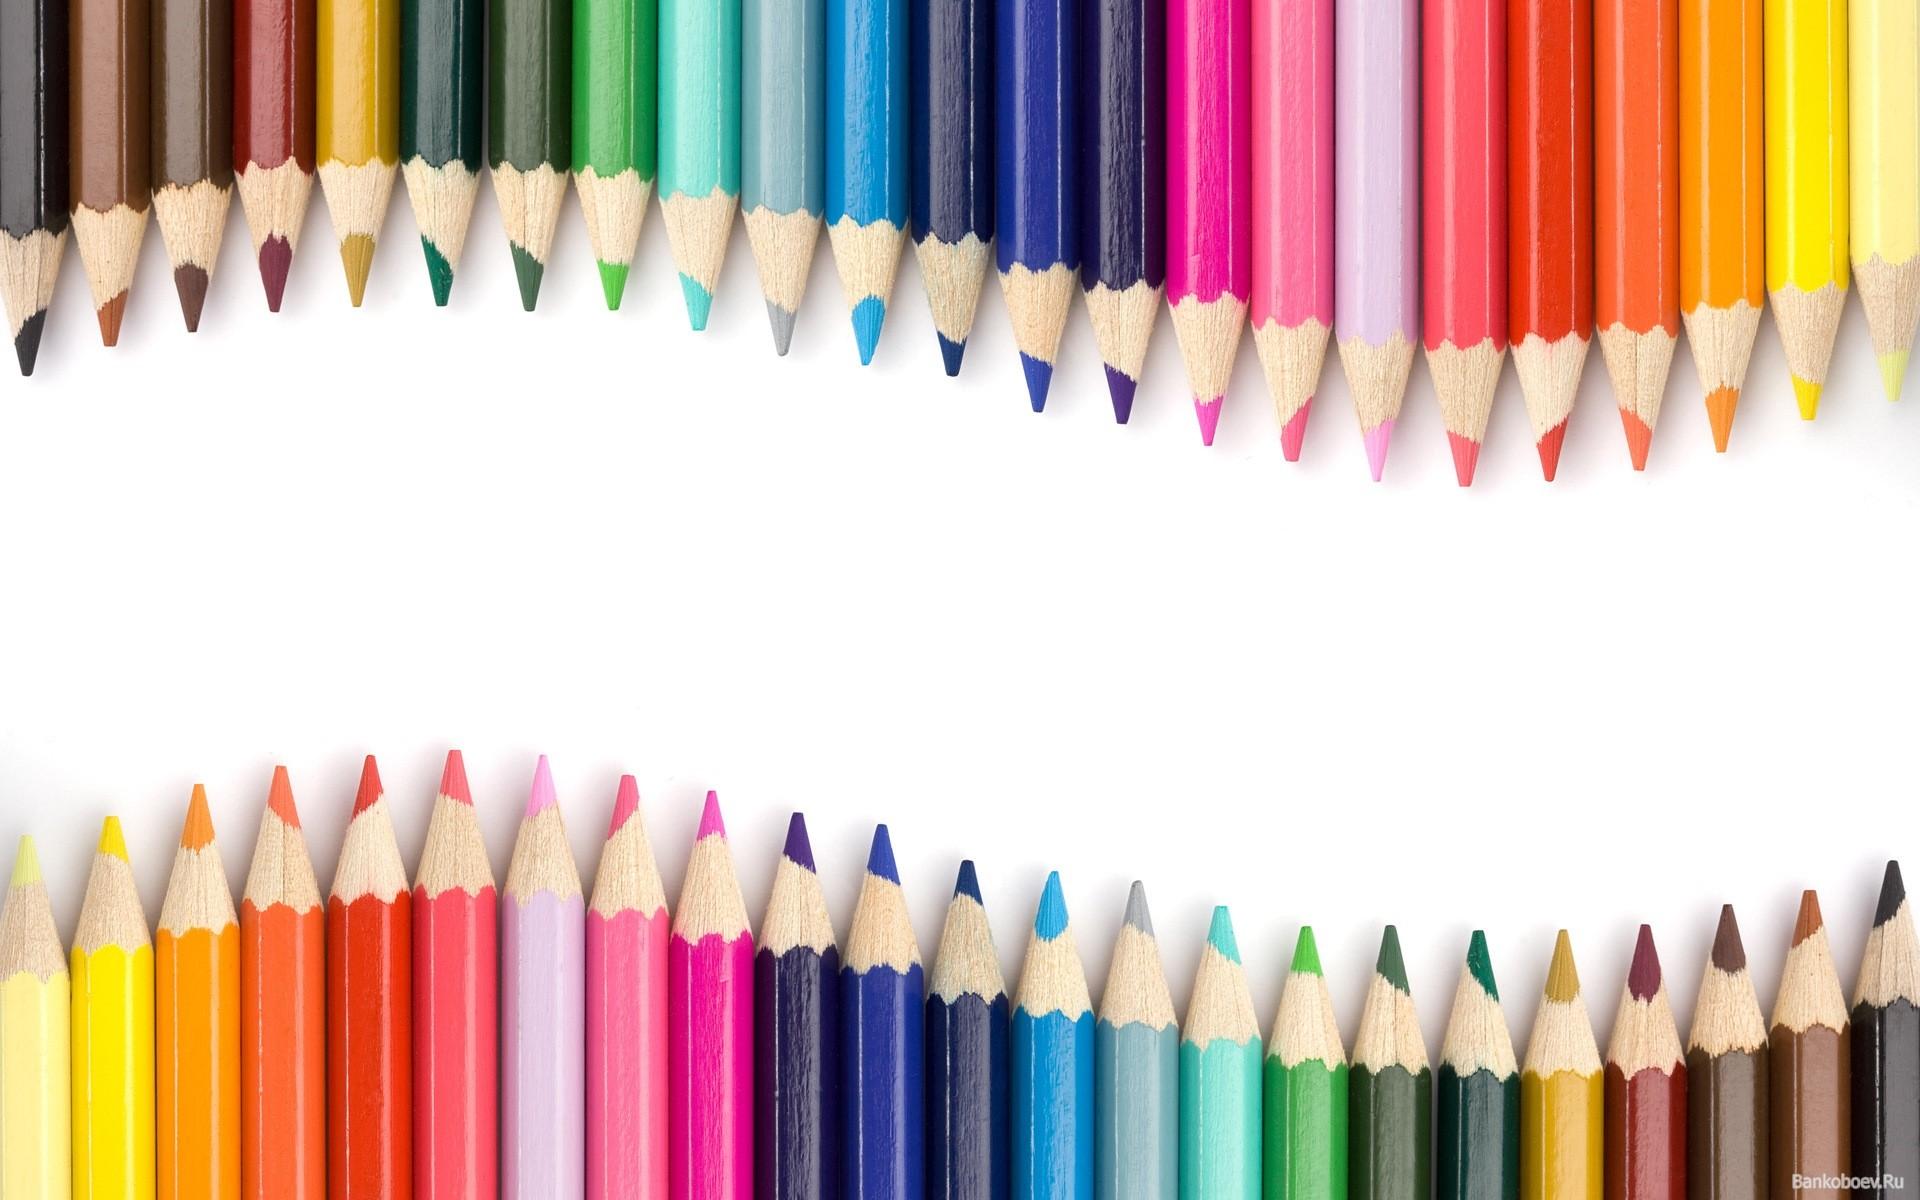 Colored Pencils Curves wallpaper. Colored Pencils Curves stock